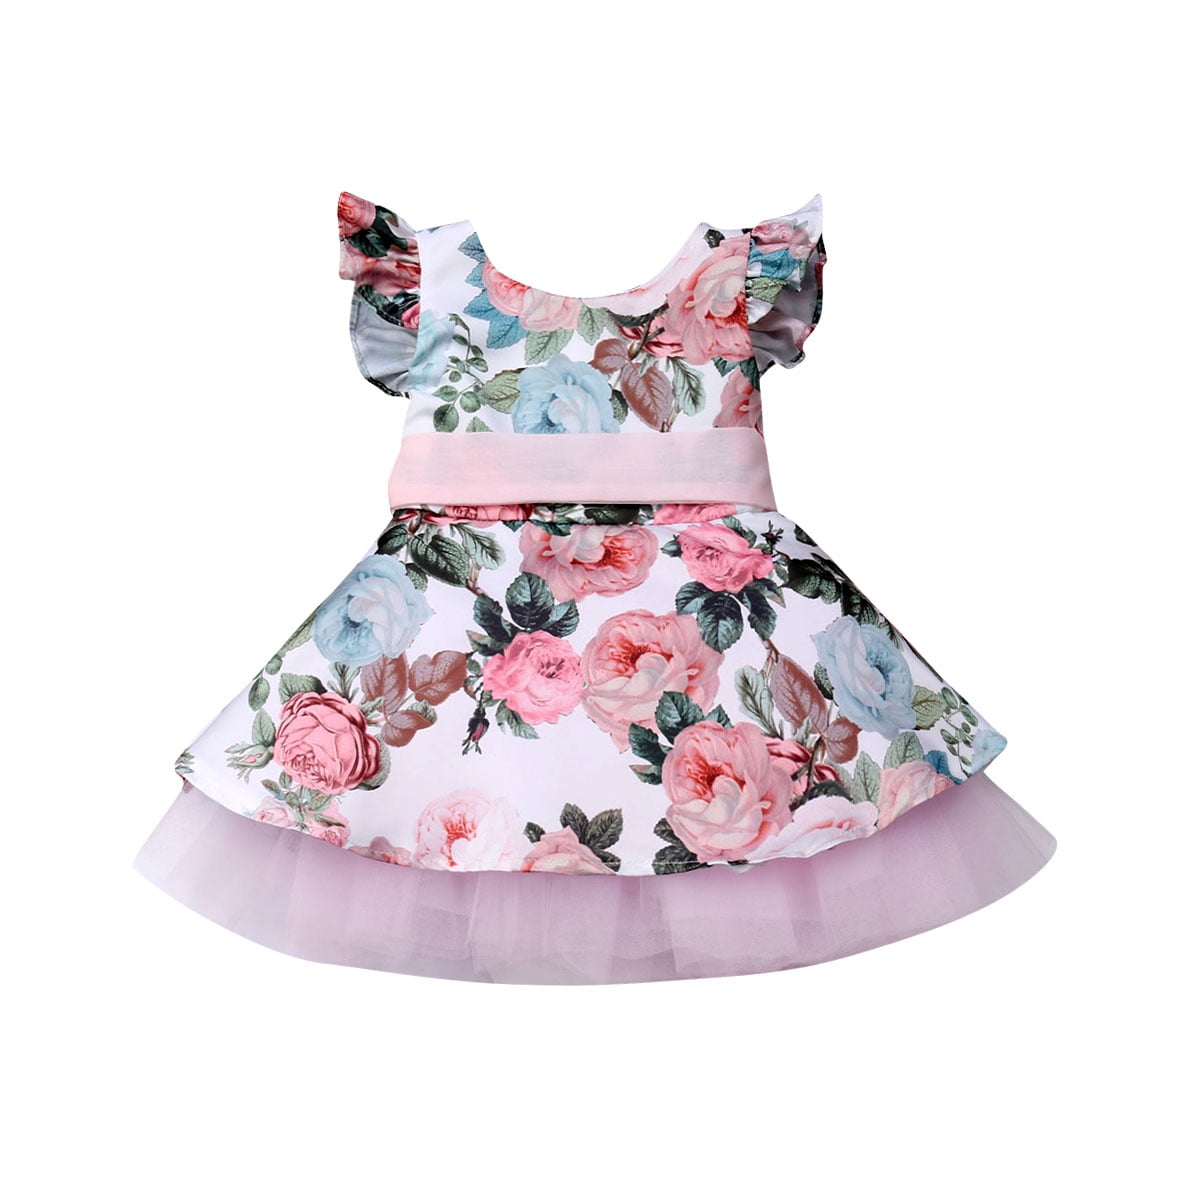 Infant Baby Girls Fly Sleeve  Bow Dress Clothes Dresses Princess Tutu 3M-24M 